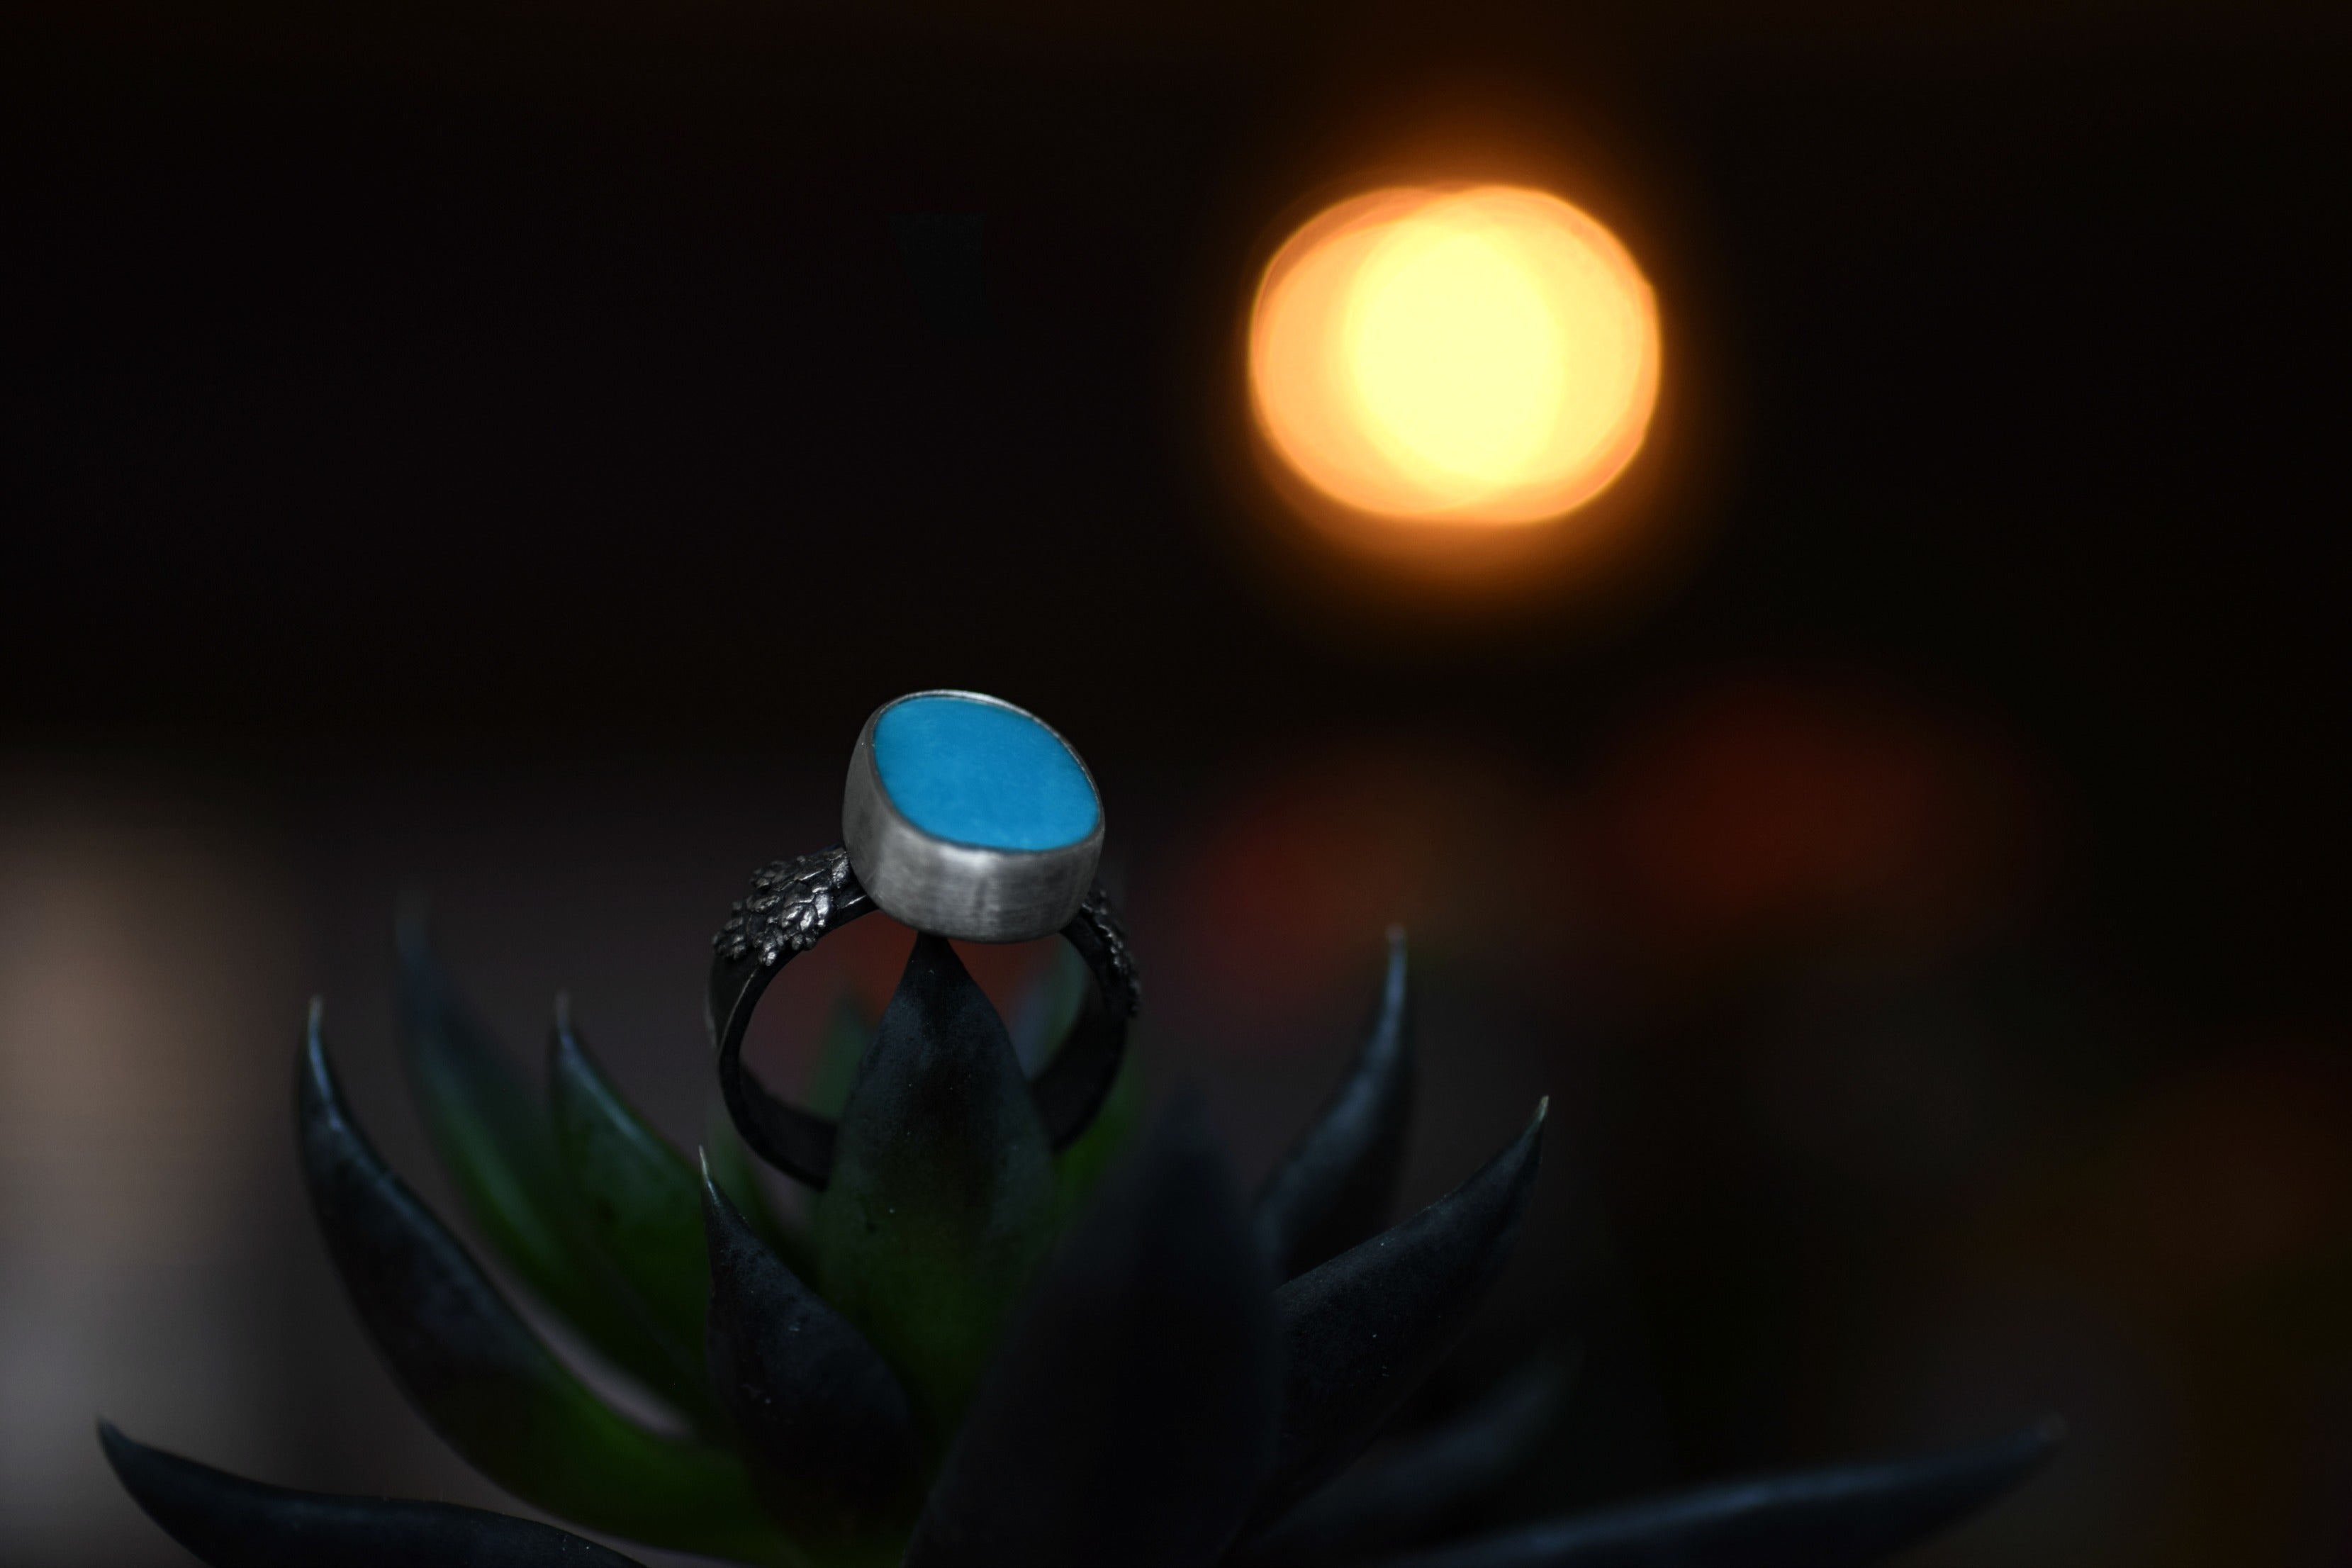 XSleeping Beauty Turquoise Ring -Double Ferns - Silver and Turquoise - Size 8.25 - Turquoise Ring - Real Cast Fern - Woodland Ring